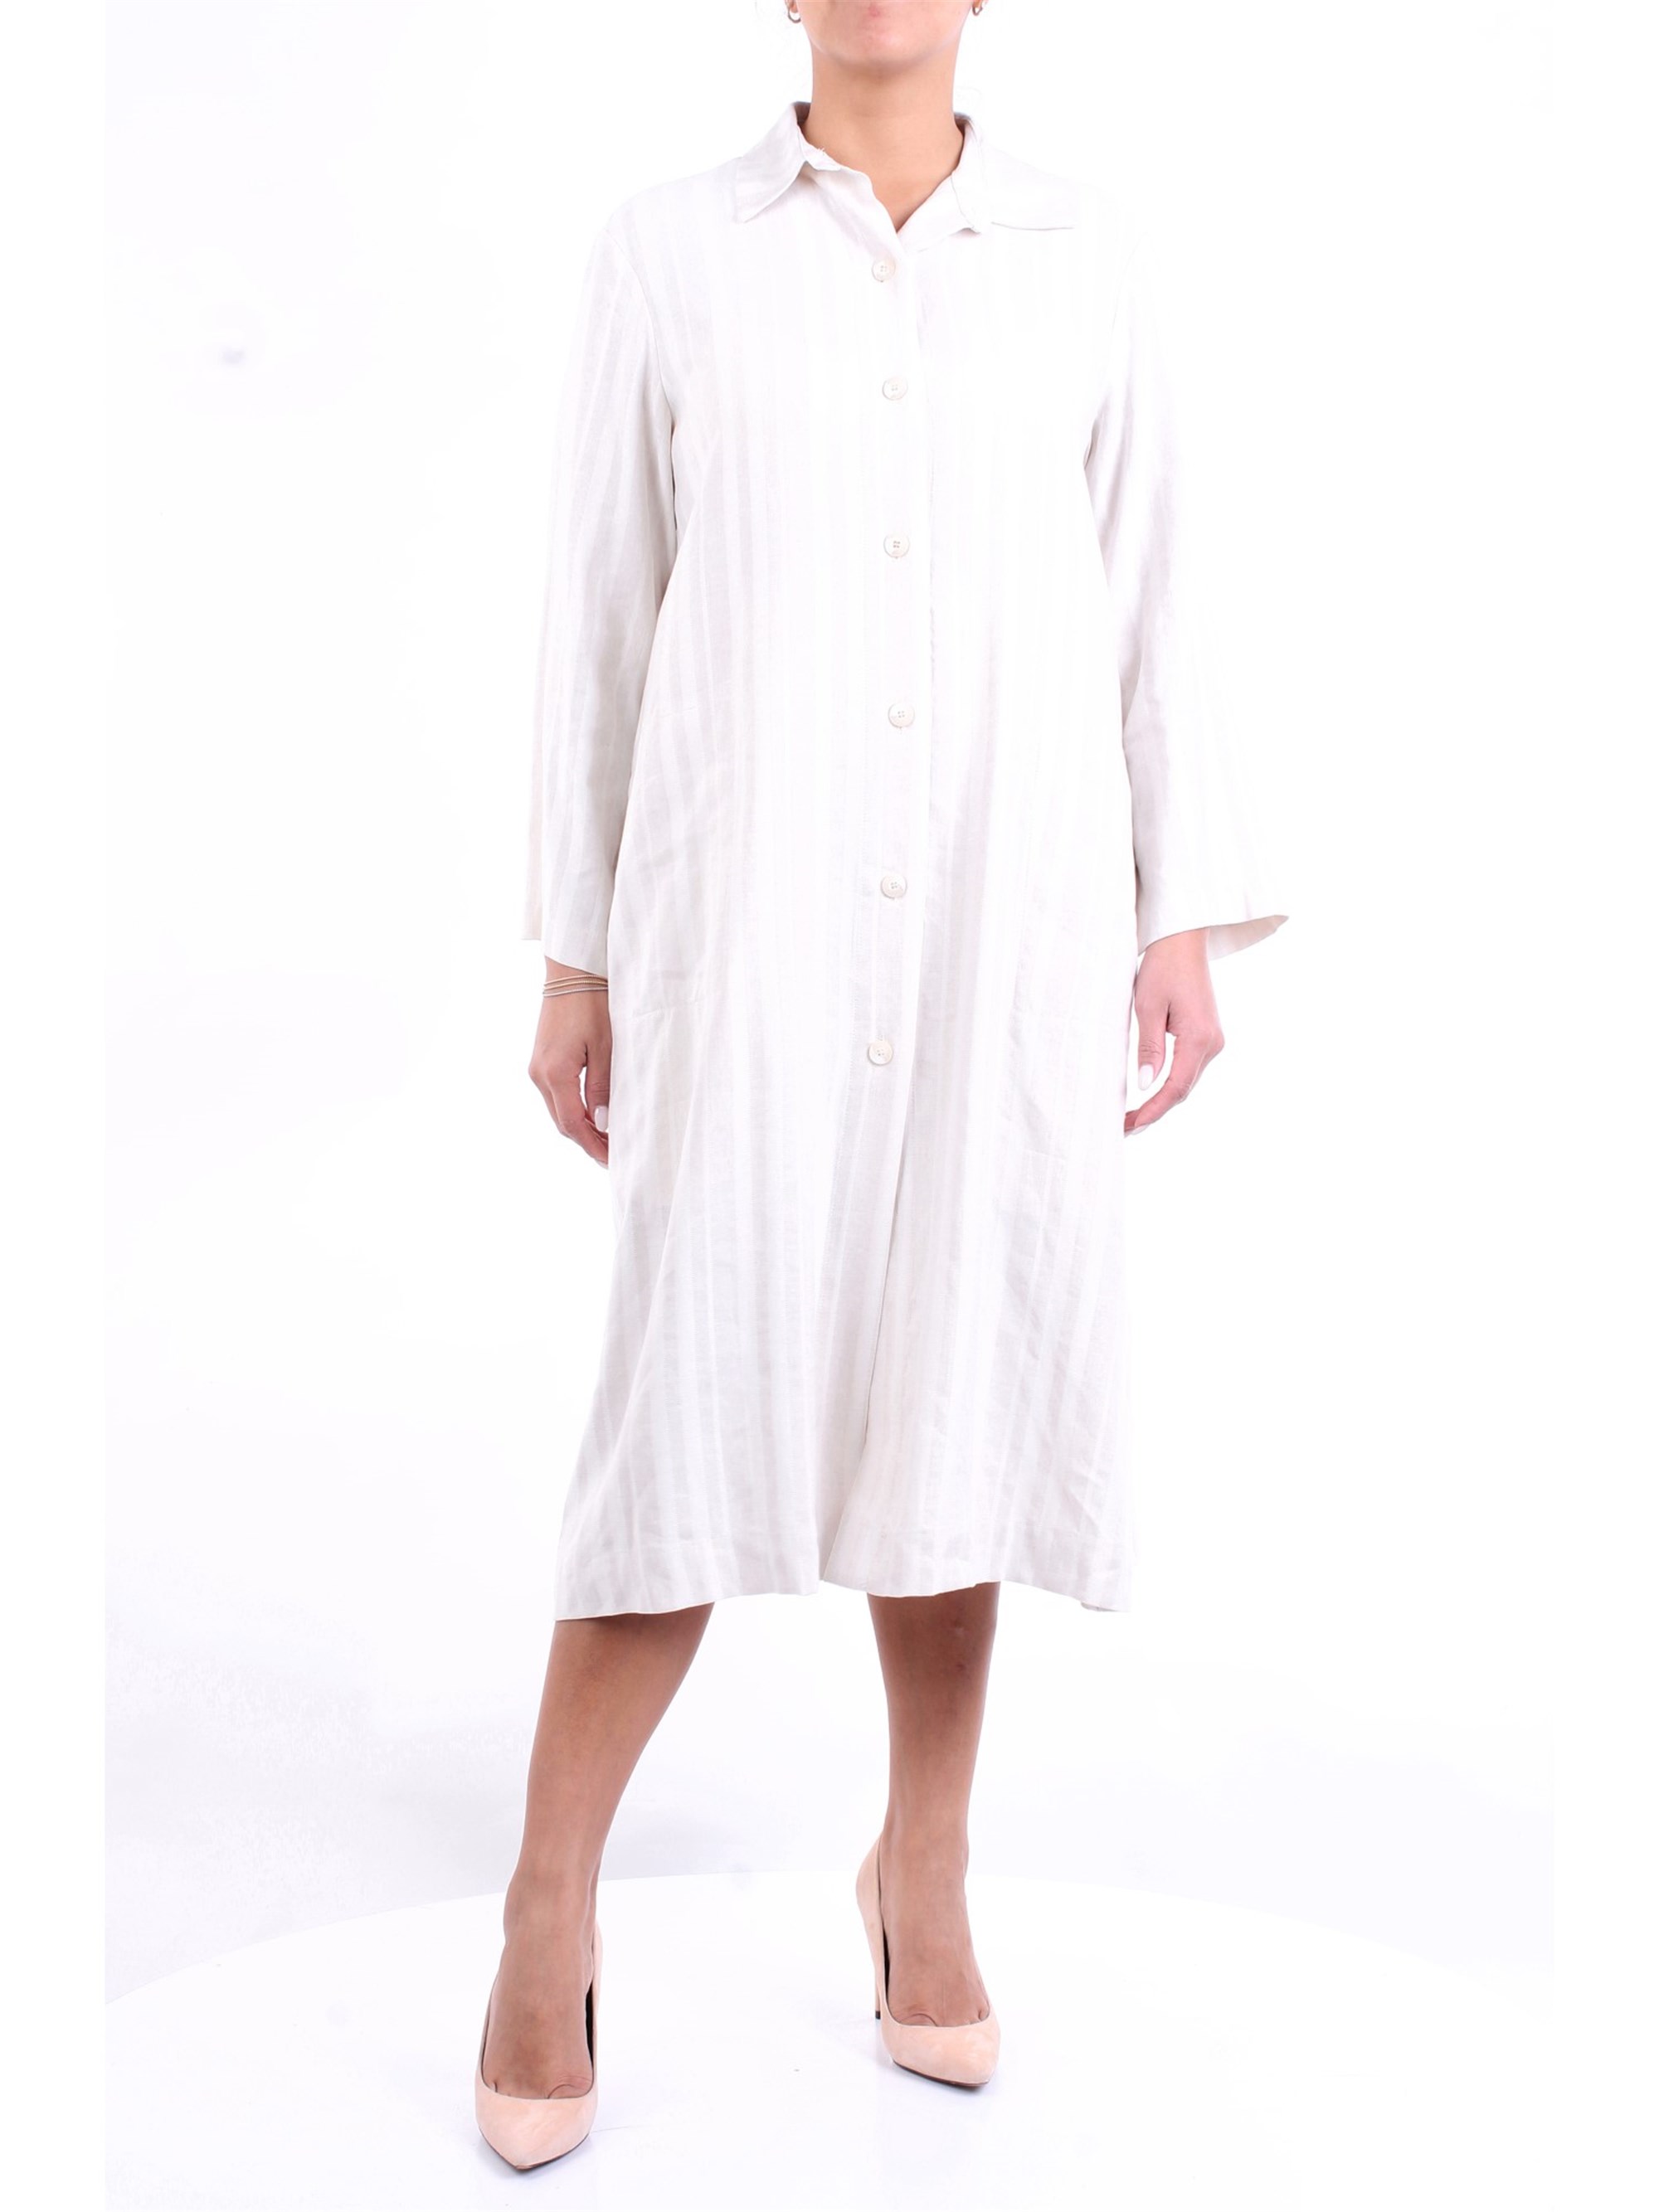 MARCHE' 21 CRISTINA TARONI Kaftane / Shirt Damen Kreide günstig online kaufen